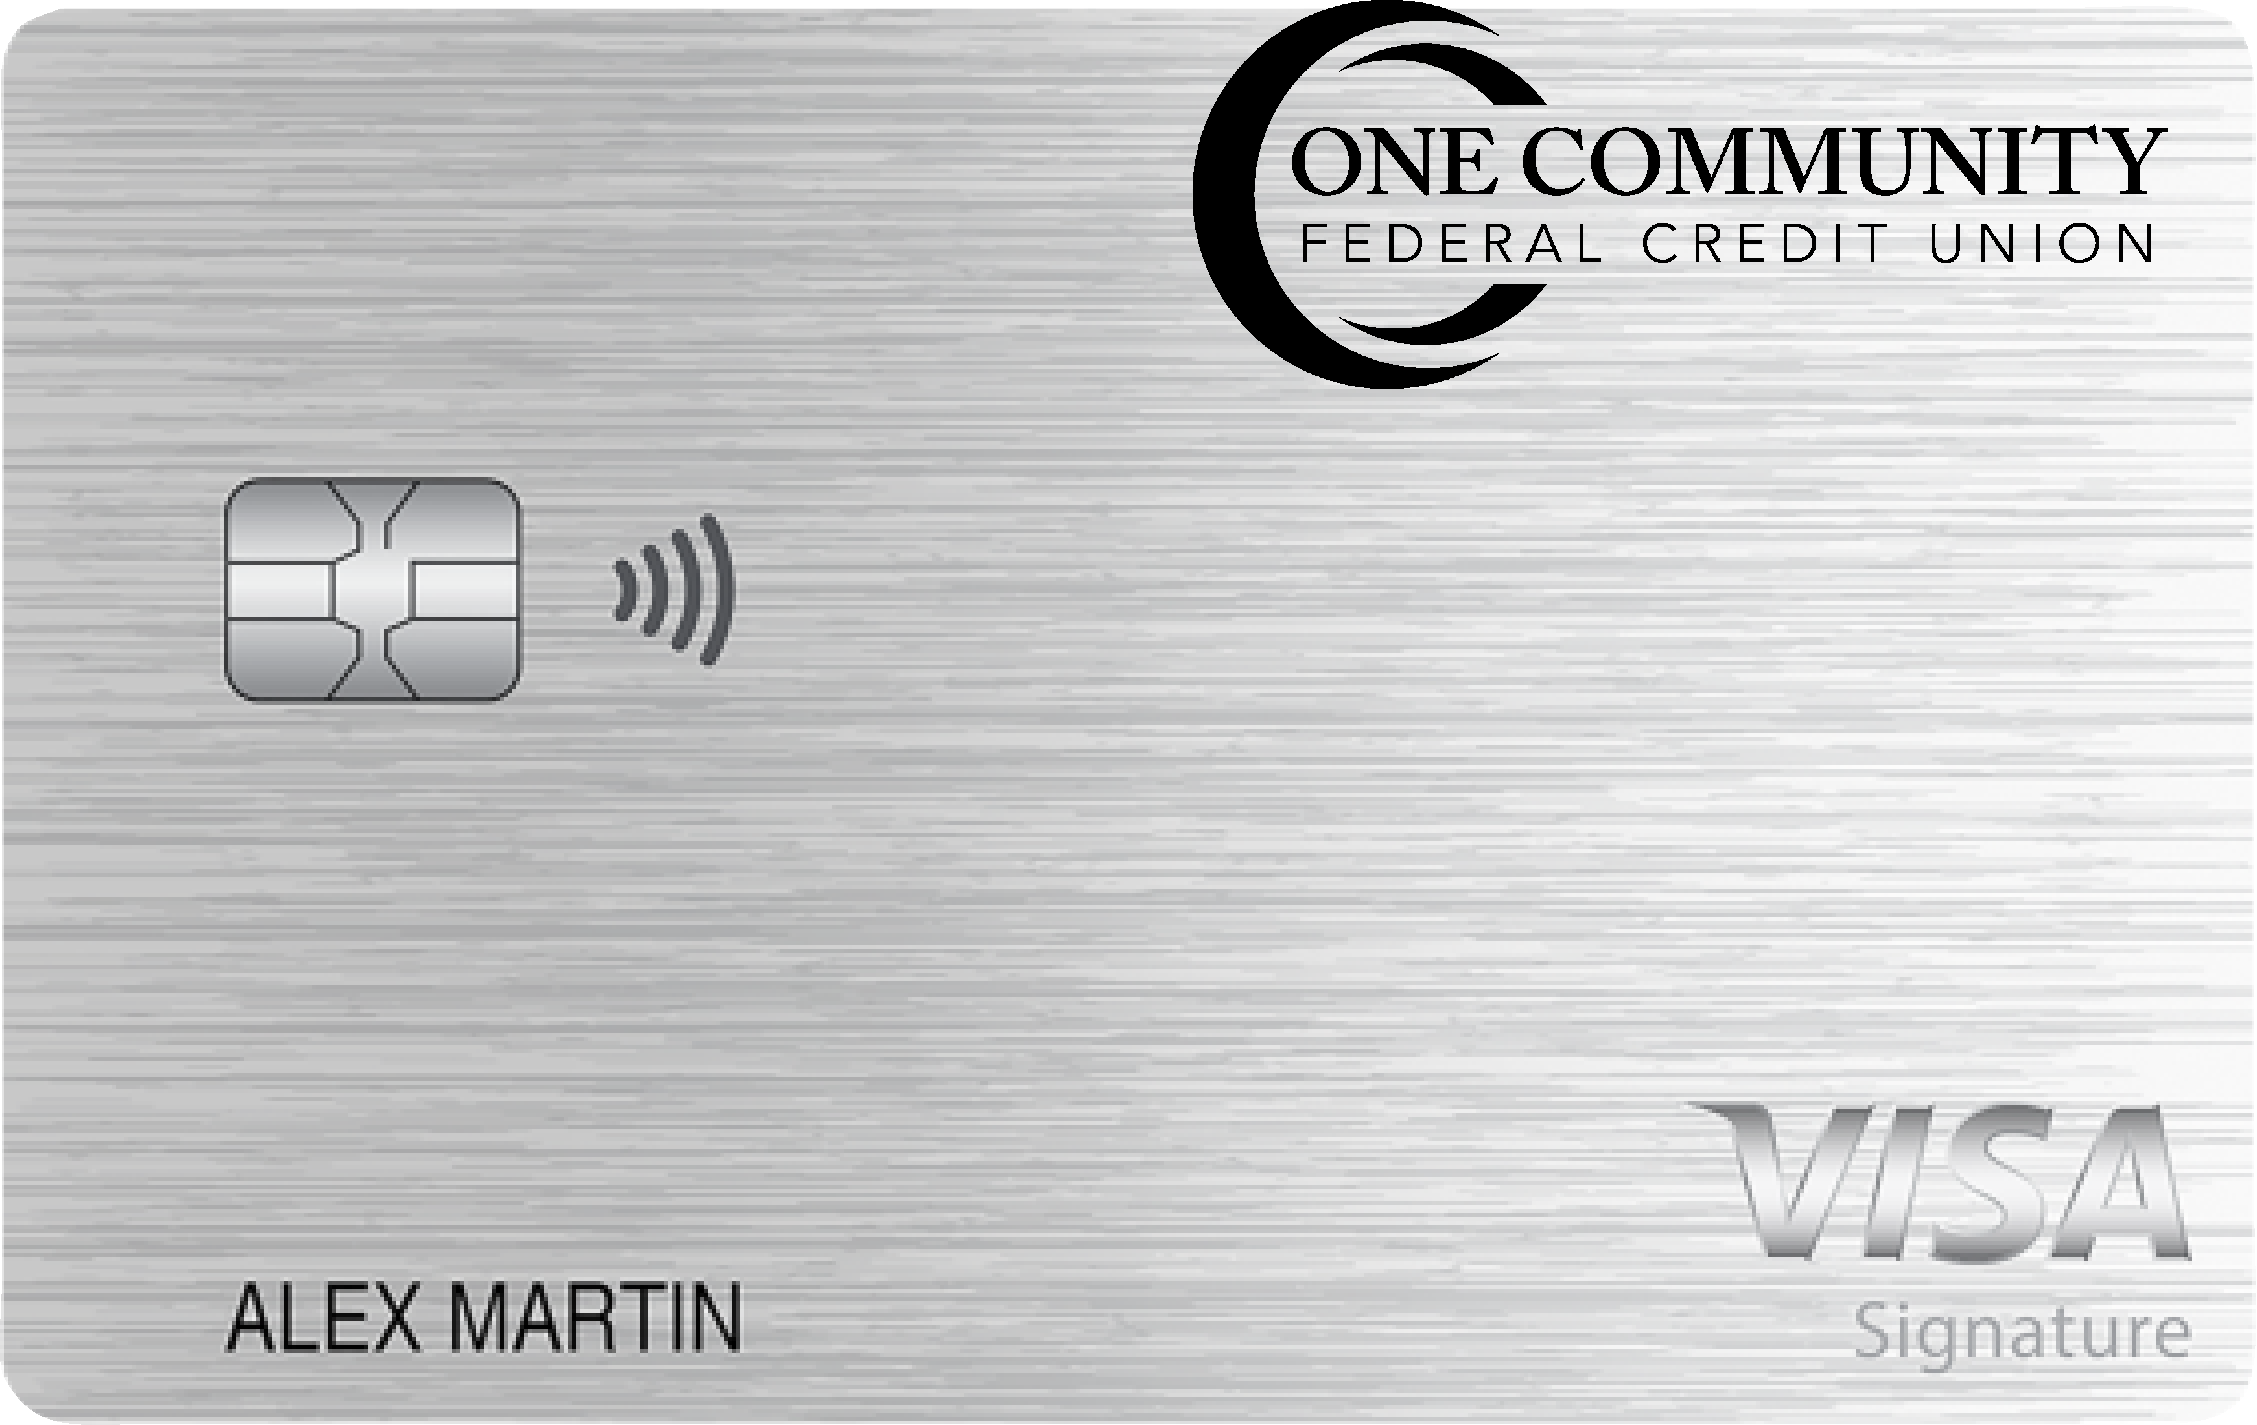 One Community Federal Credit Union